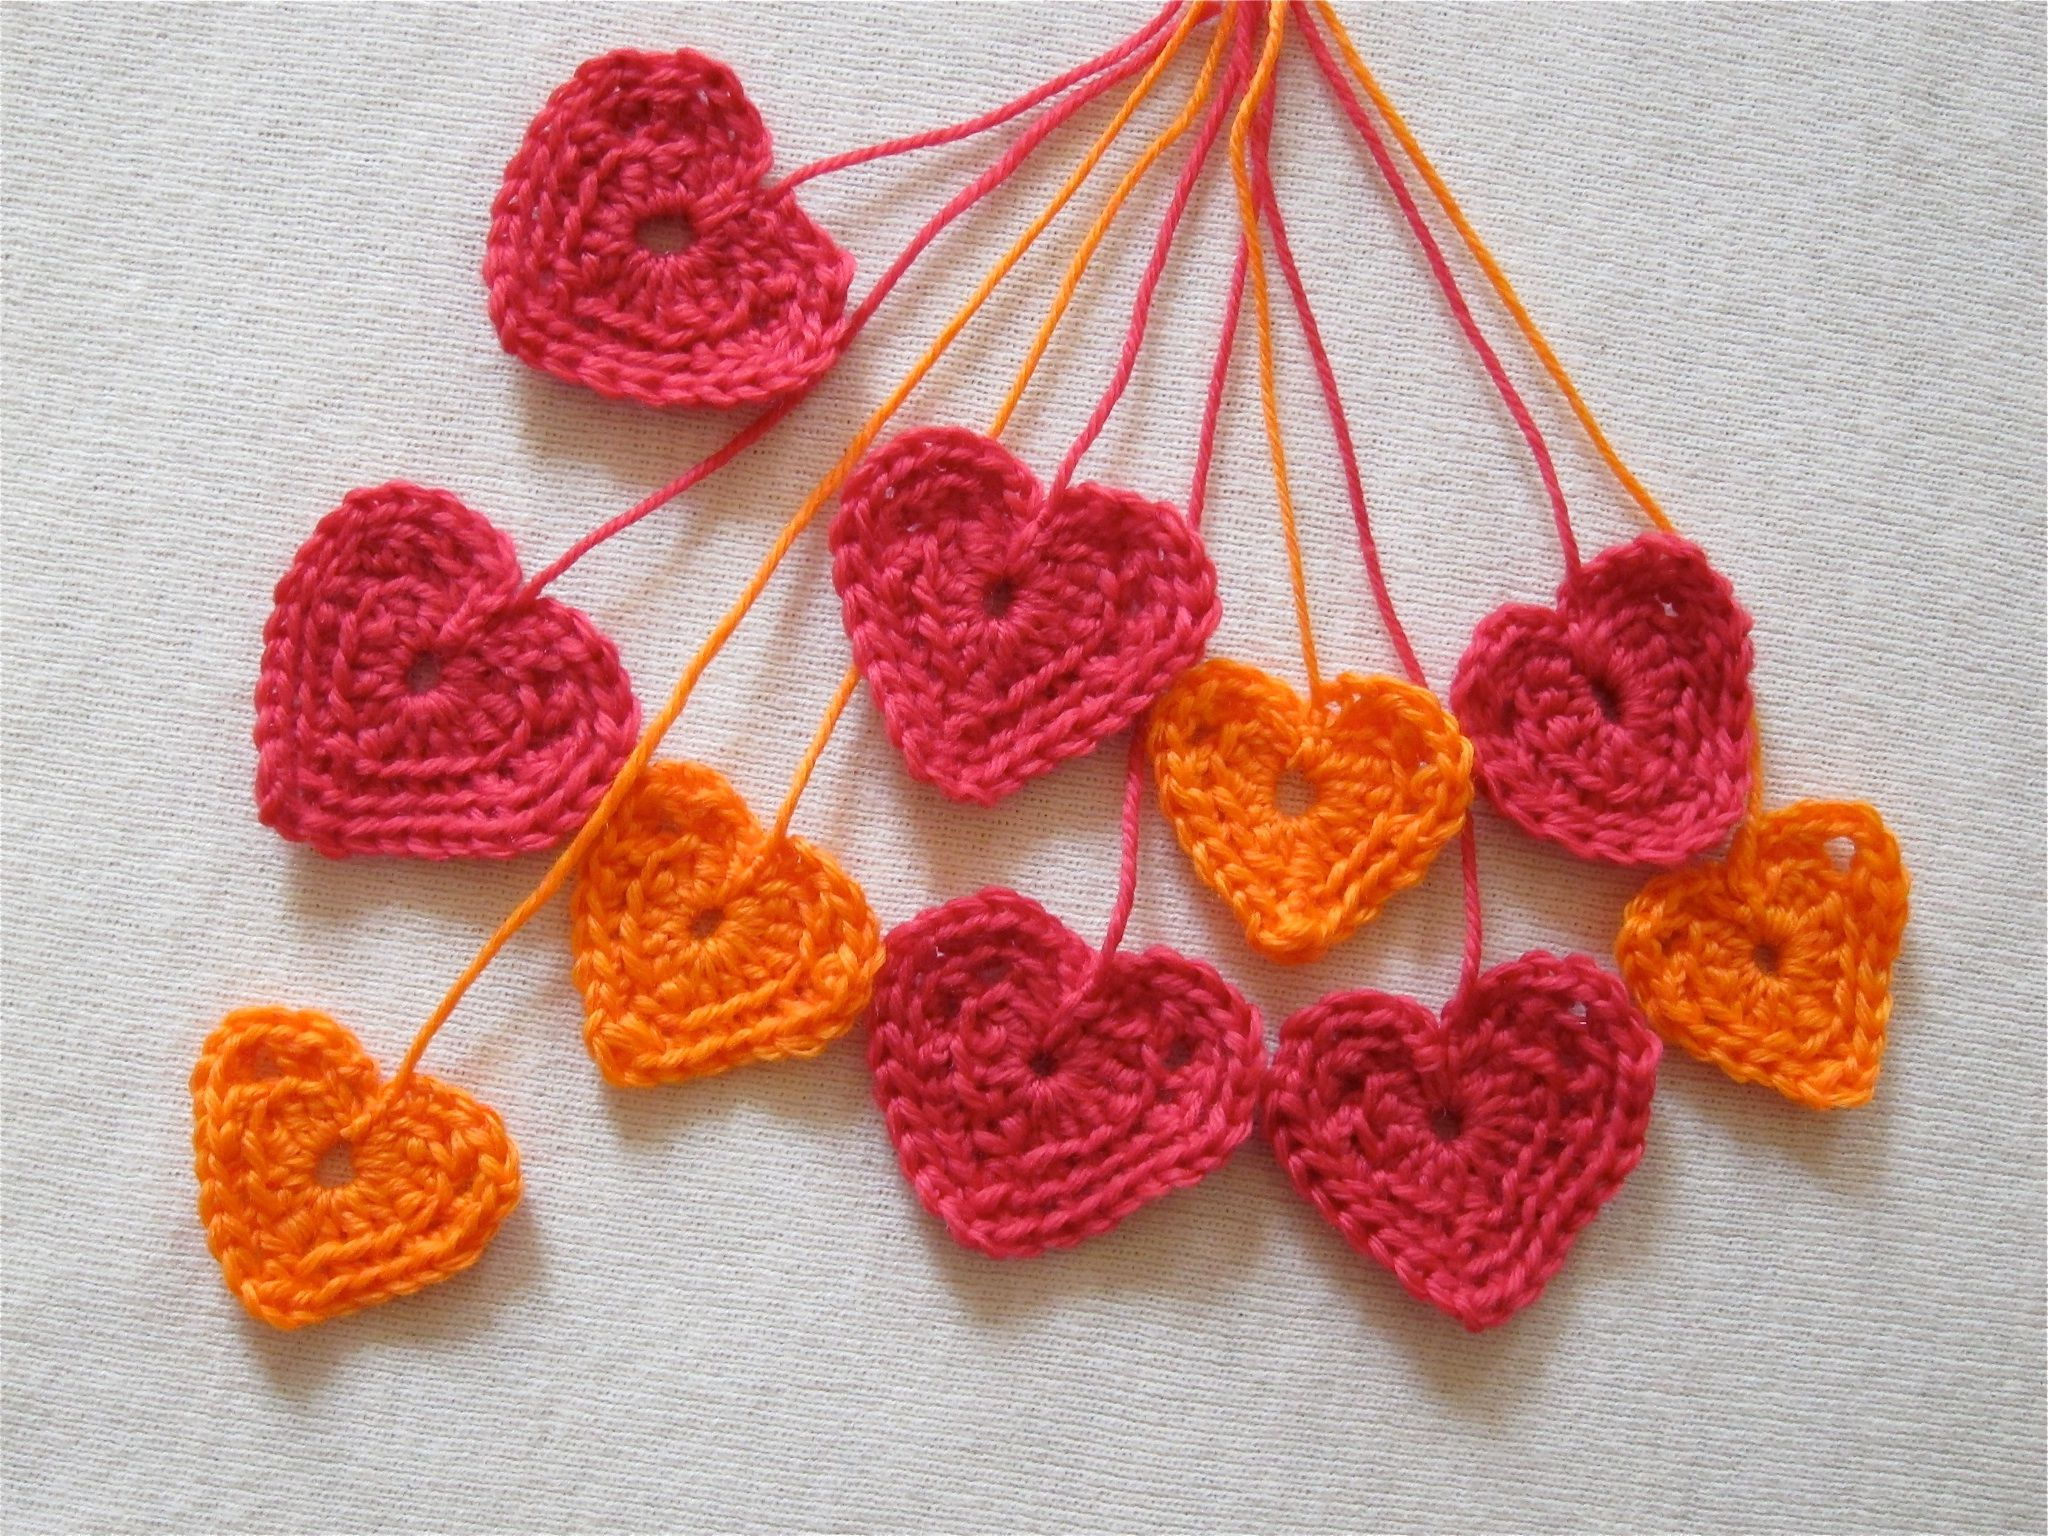 Crochet Heart Patterns 10 Crochet Heart Patterns For Valentines Day